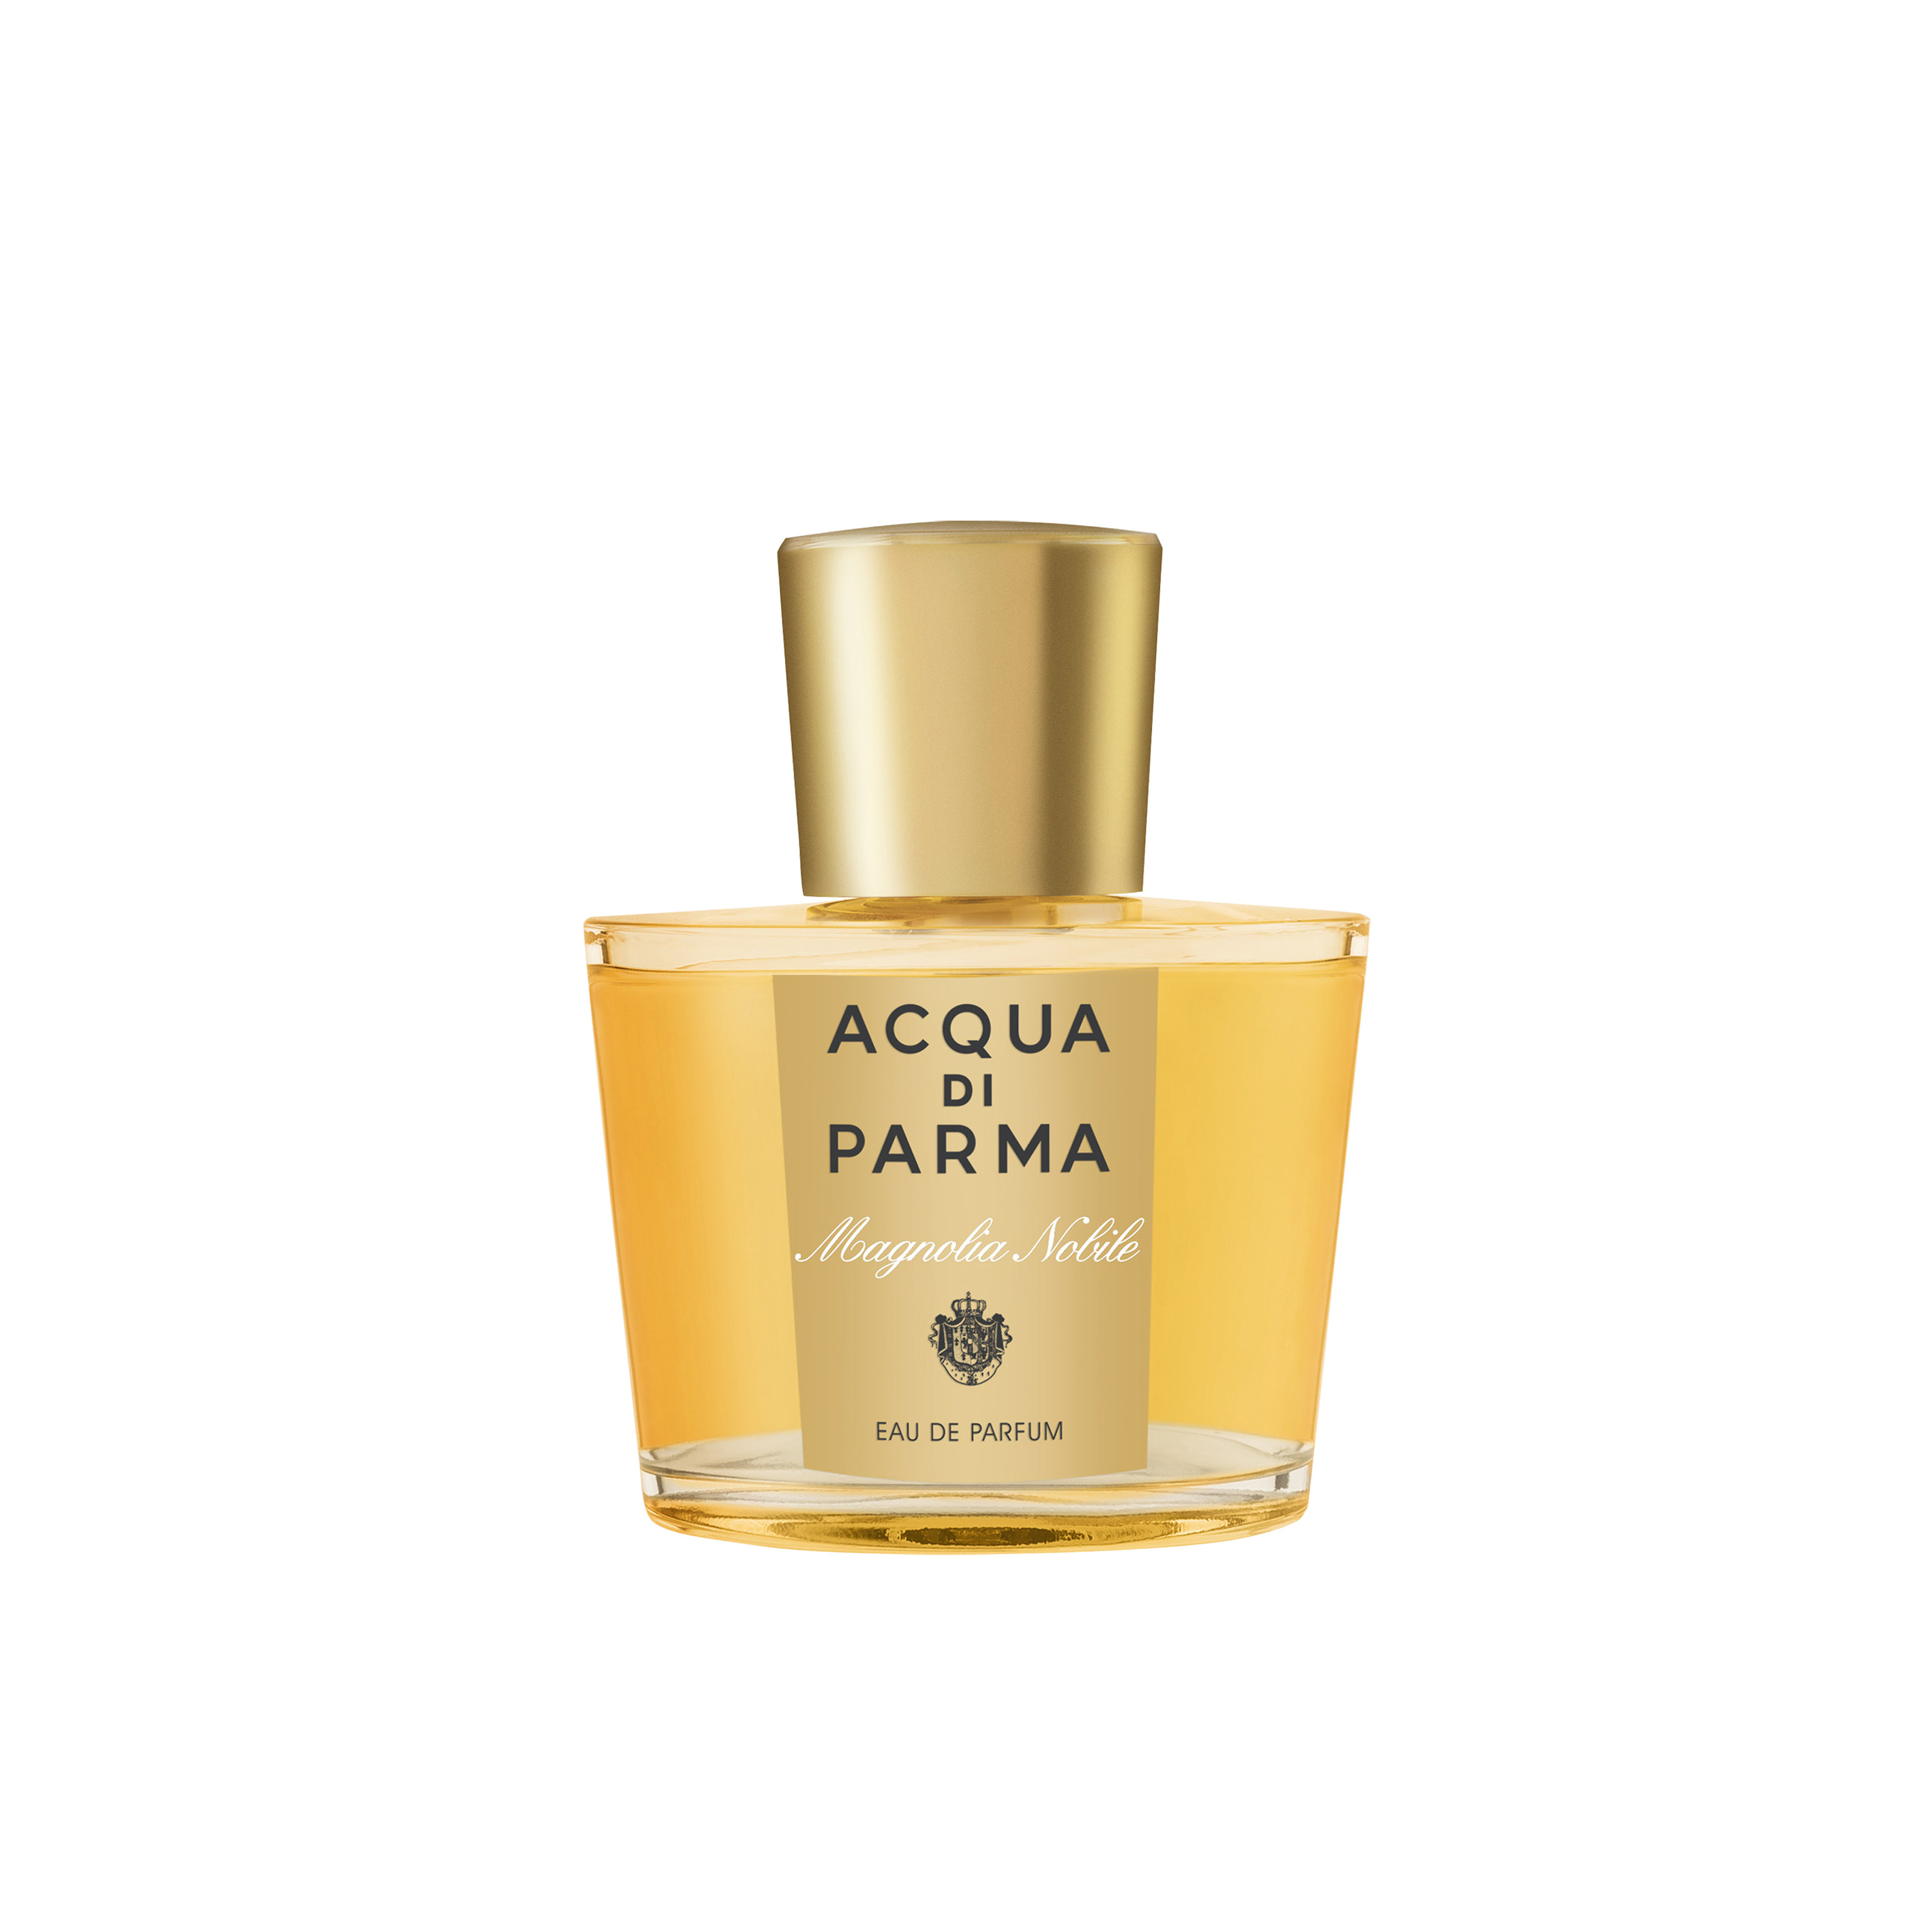 Acqua di Parma Magnolia Nobile Eau de Parfum ✔️ acquista online